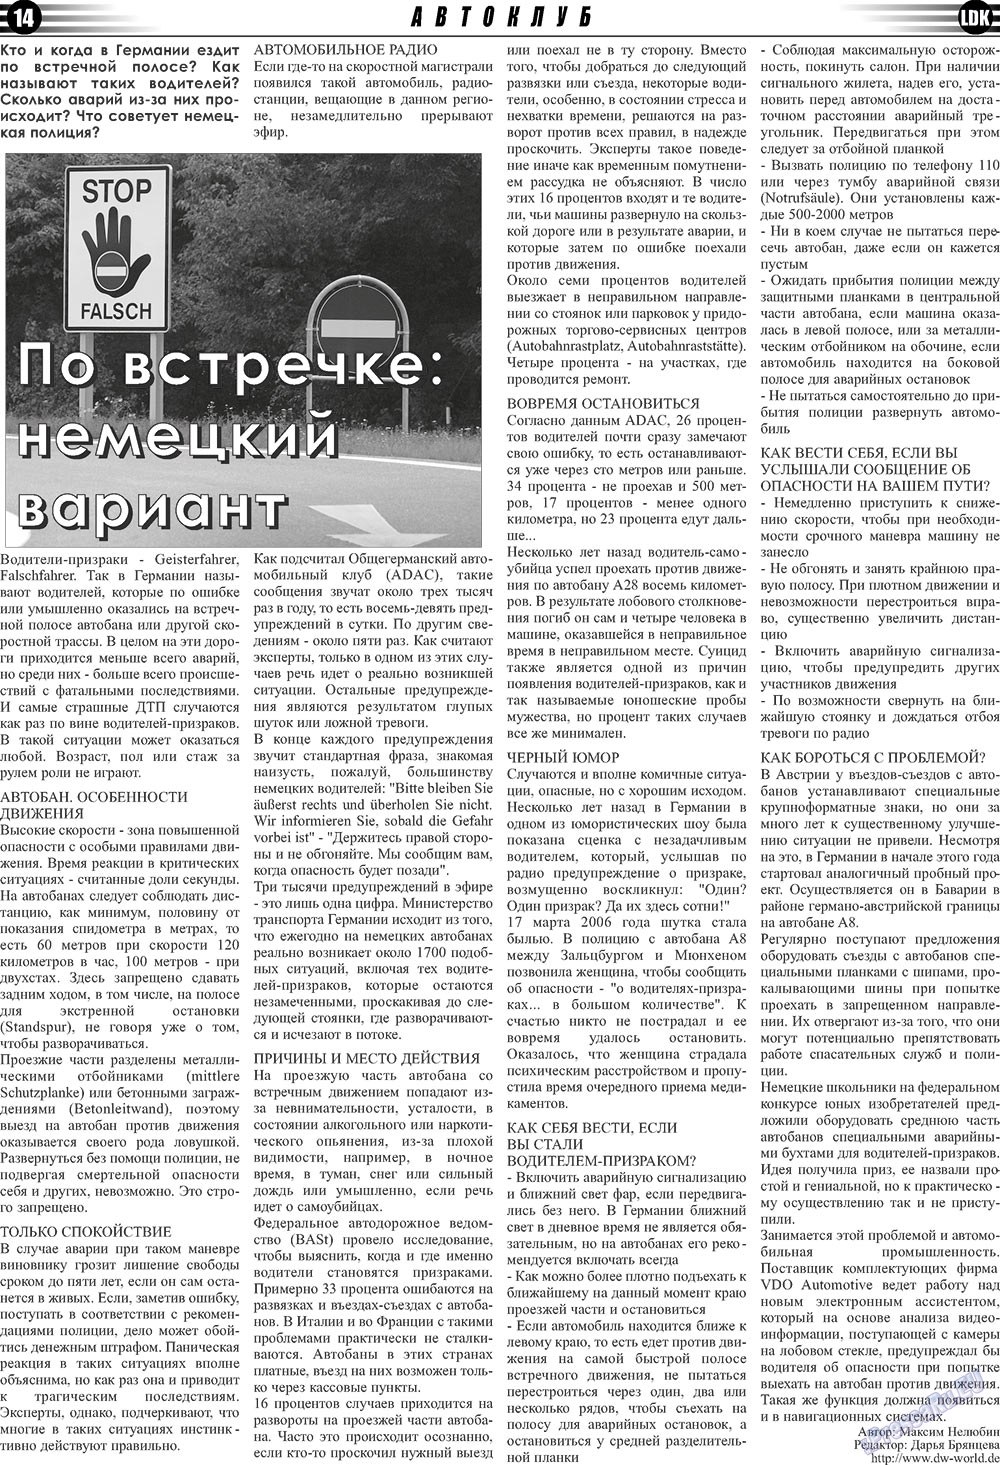 LDK по-русски, газета. 2011 №1 стр.14